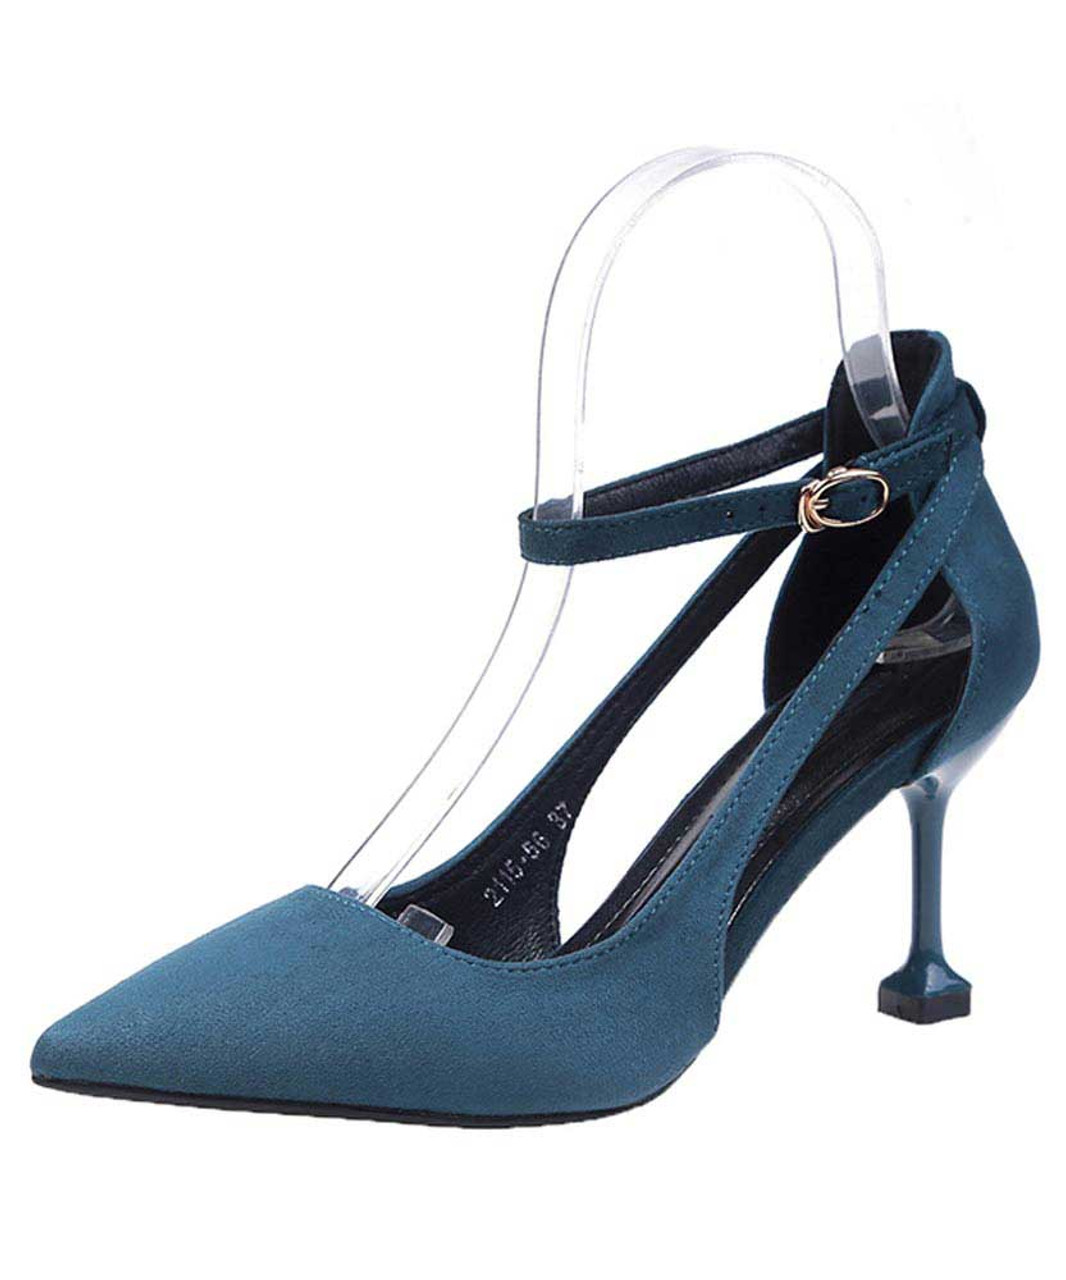 Black Suedette Cut Out Stiletto Heel Court Shoes | New Look